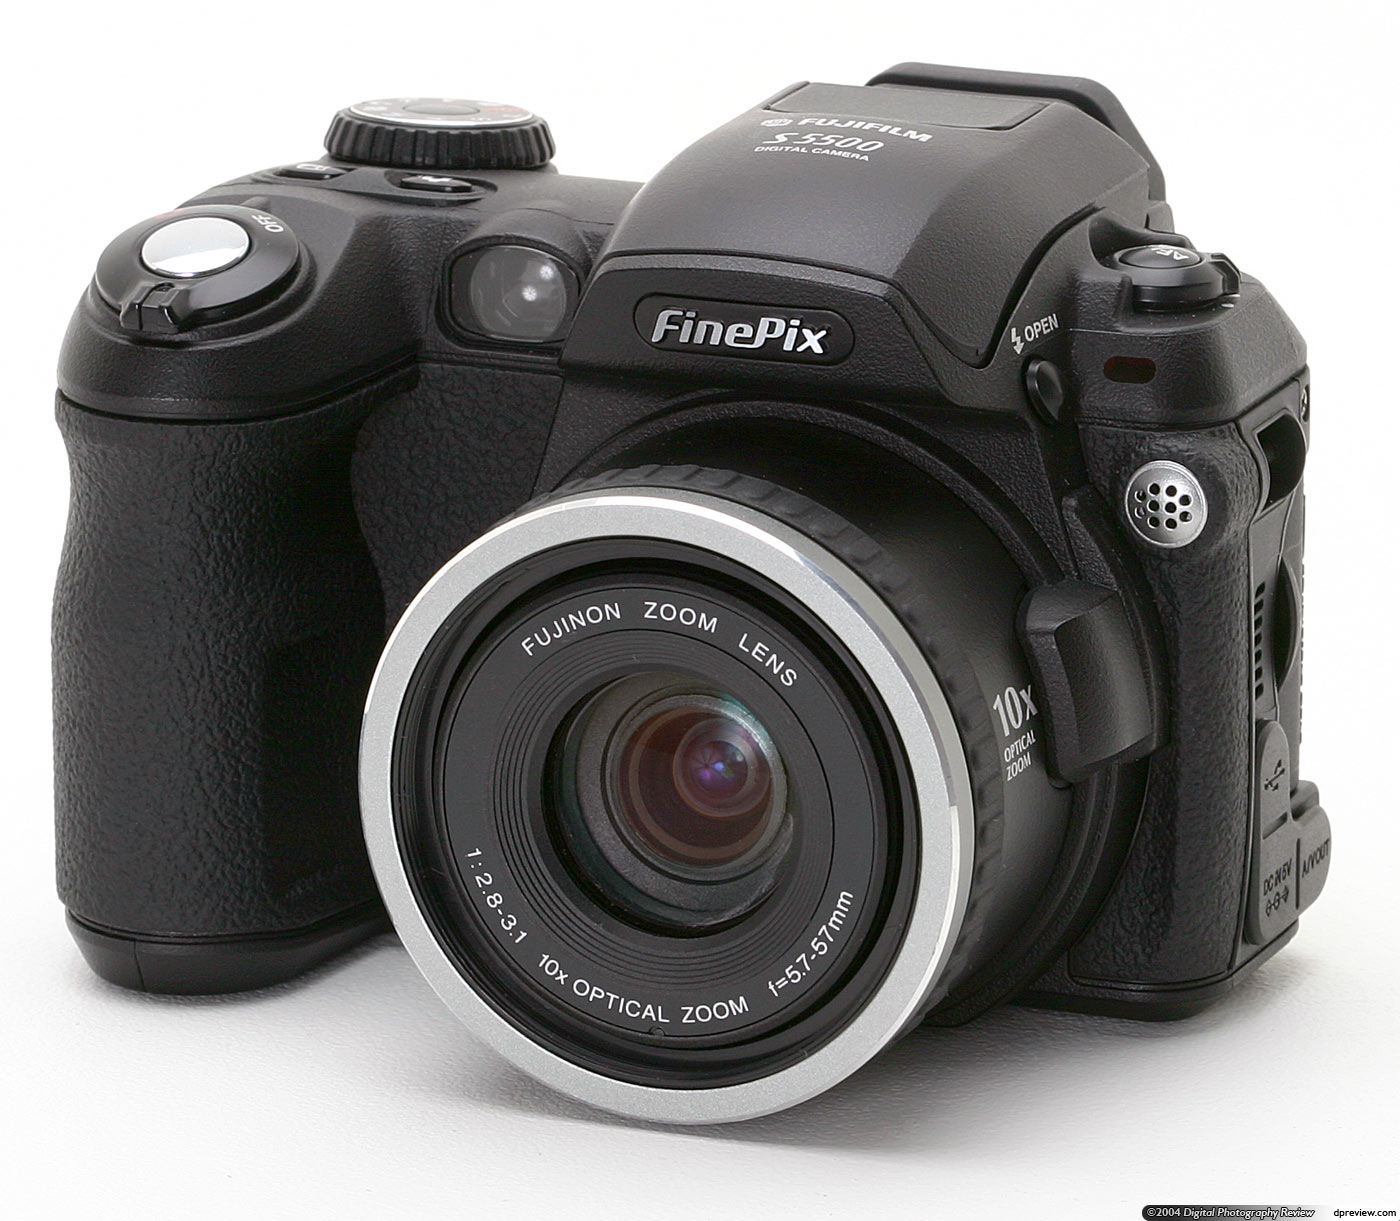 Battery for Fujifilm Finepix S5100 Digital Camera